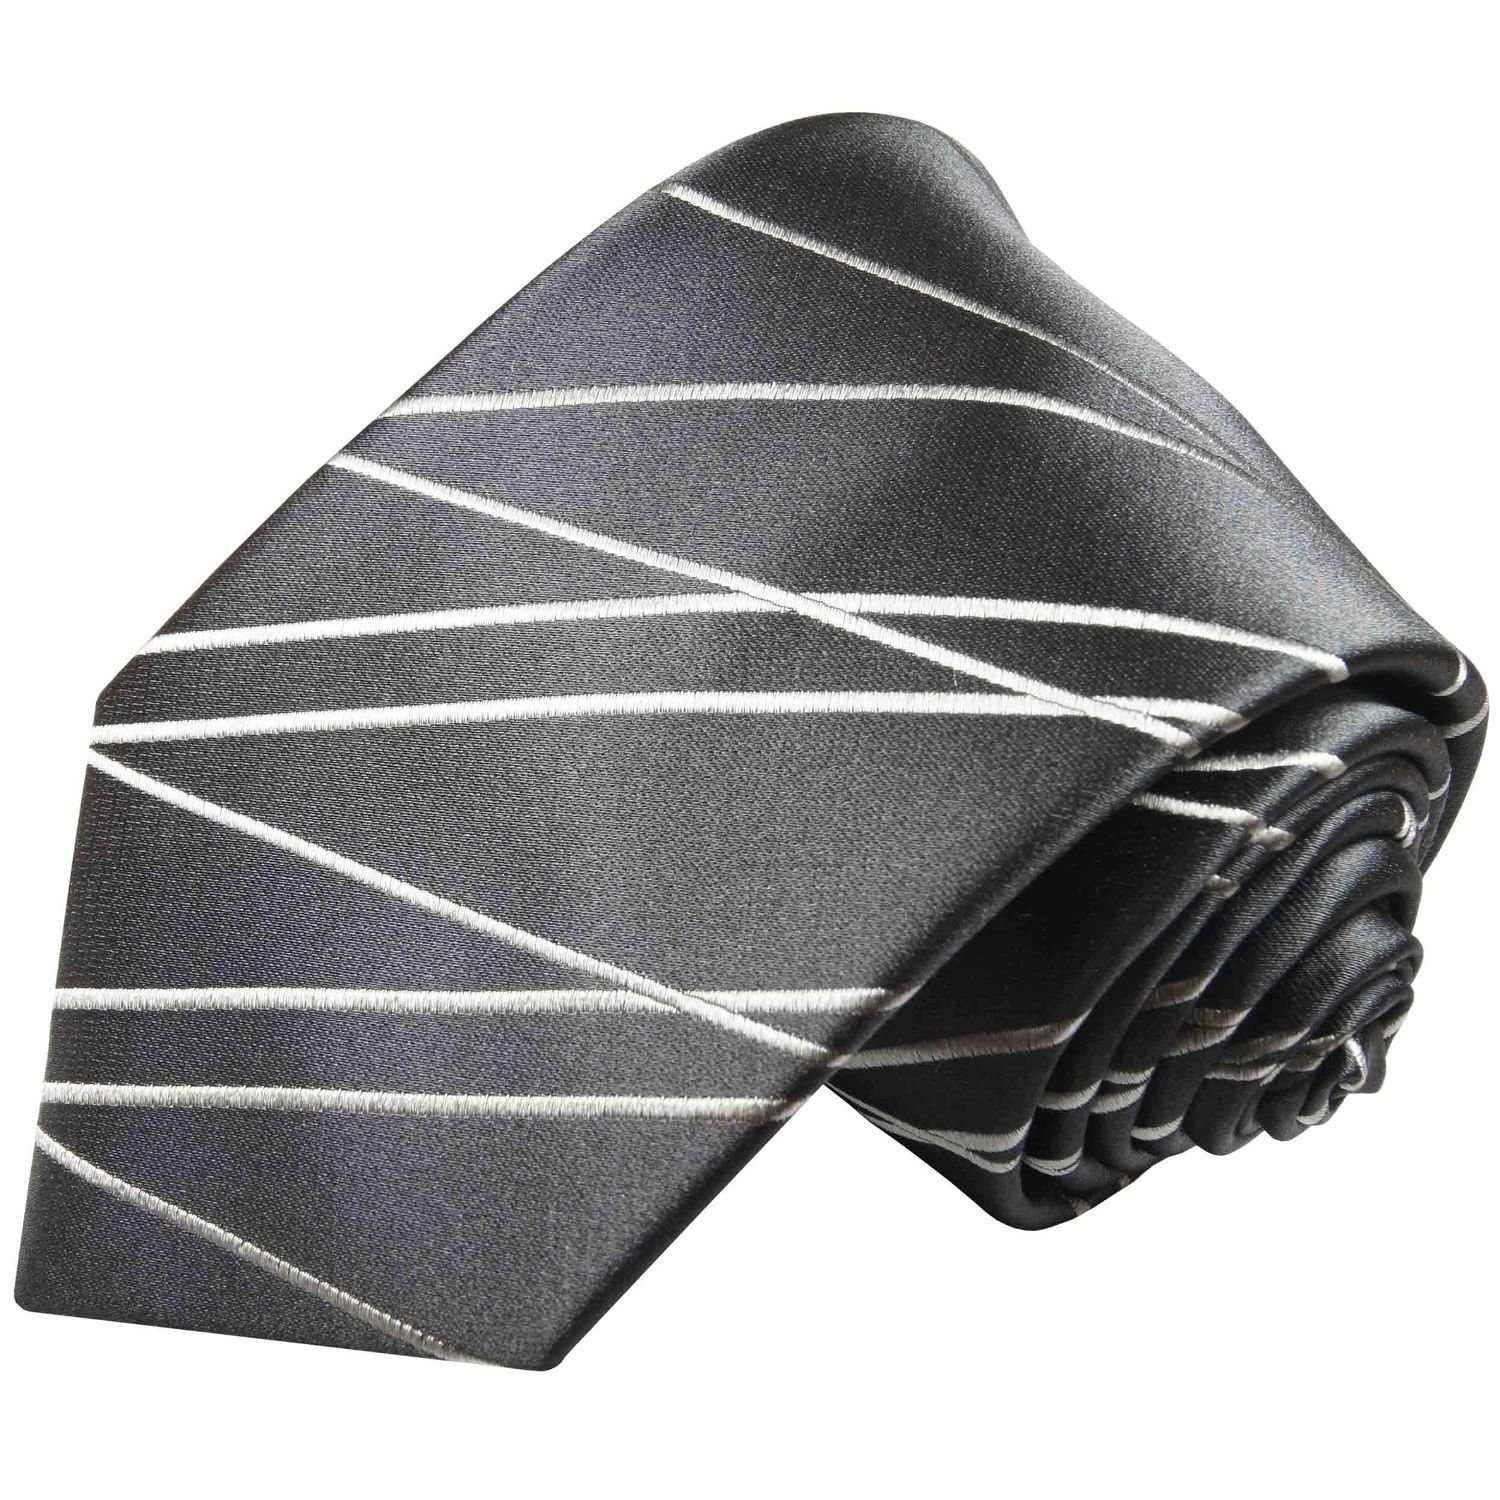 Paul Malone Krawatte Herren Seidenkrawatte Designer Schlips modern gestreift 100% Seide Schmal (6cm), silber grau 2097